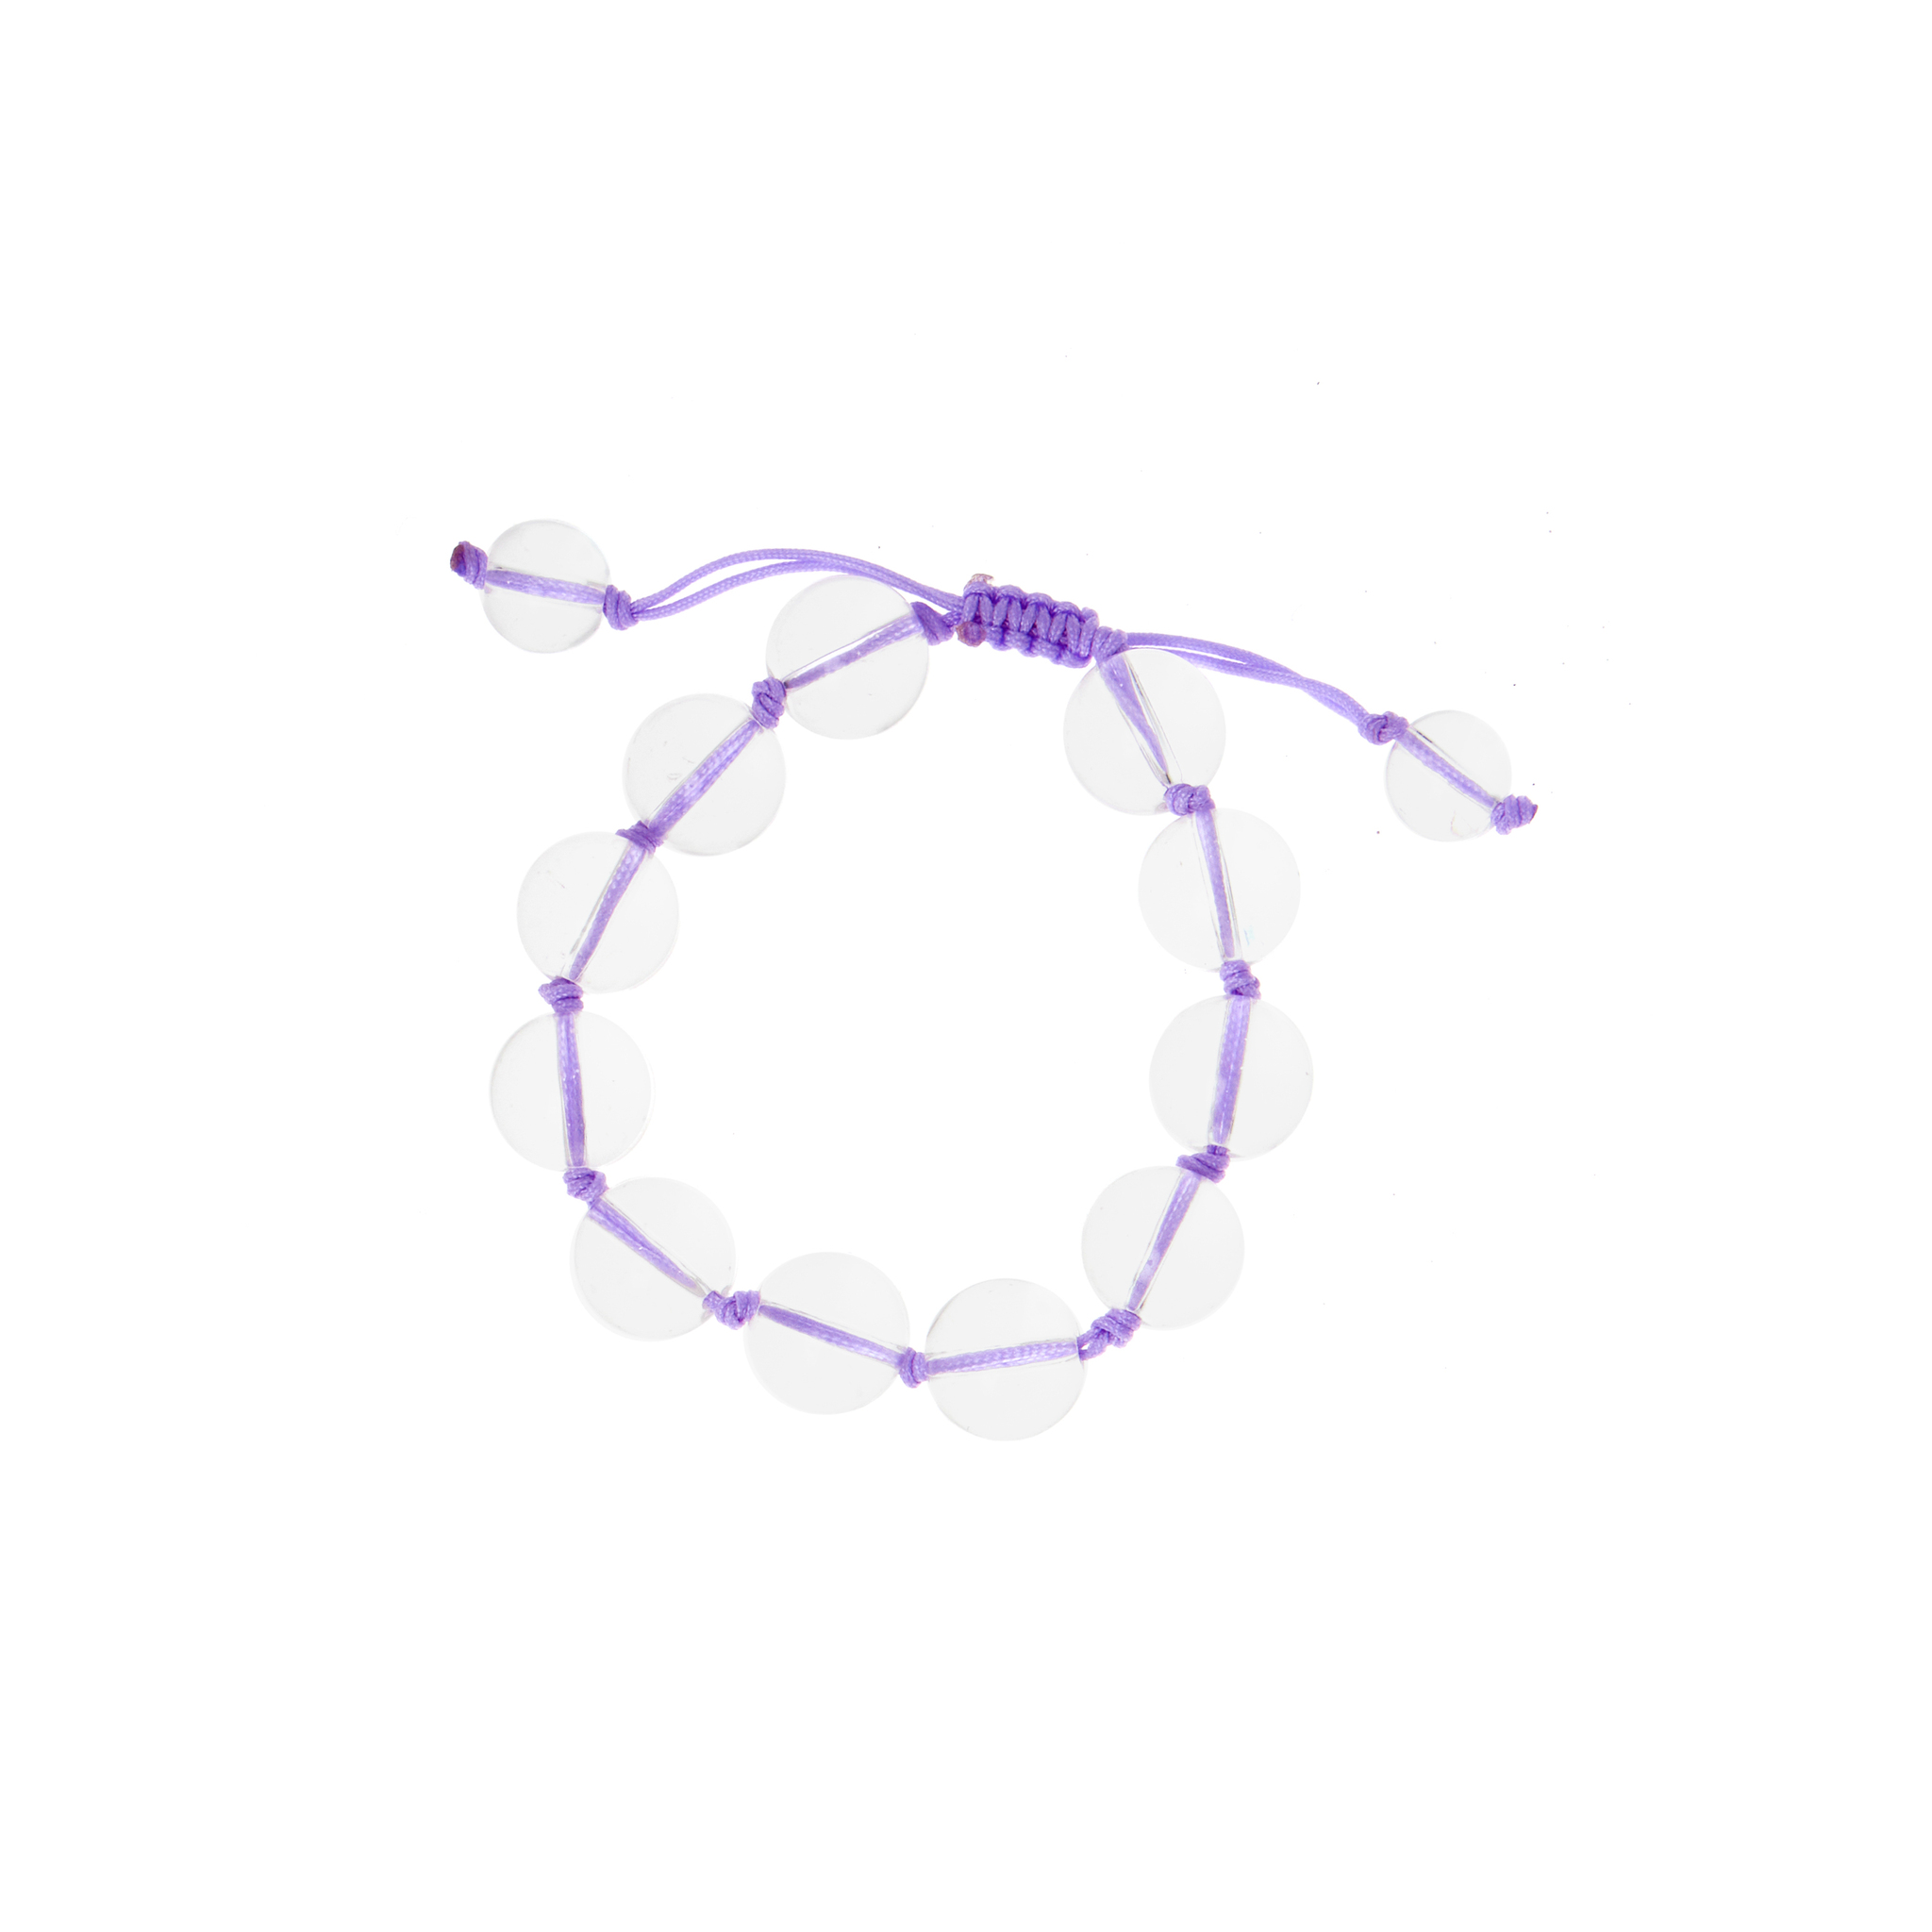 HOLLY JUNE Браслет Crystal Clear Bracelet – Violet holly june браслет your lucky bracelet